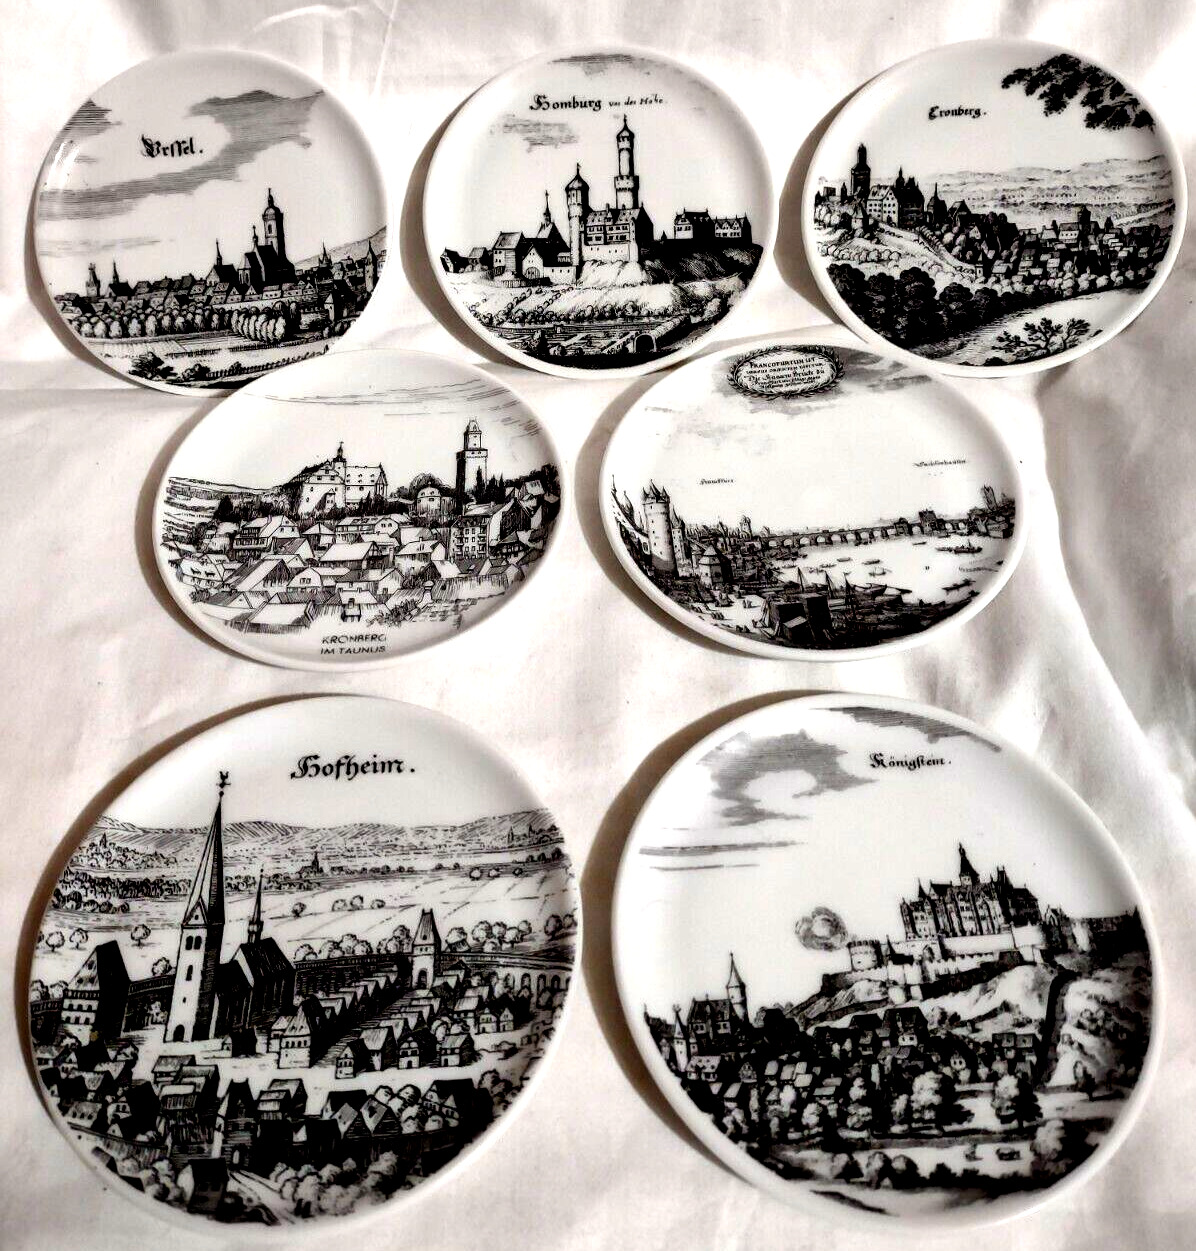 7 Coasters VTG Round Small Mini Plates Germany GEGR 1849 Uhlenhorst Souvenirs